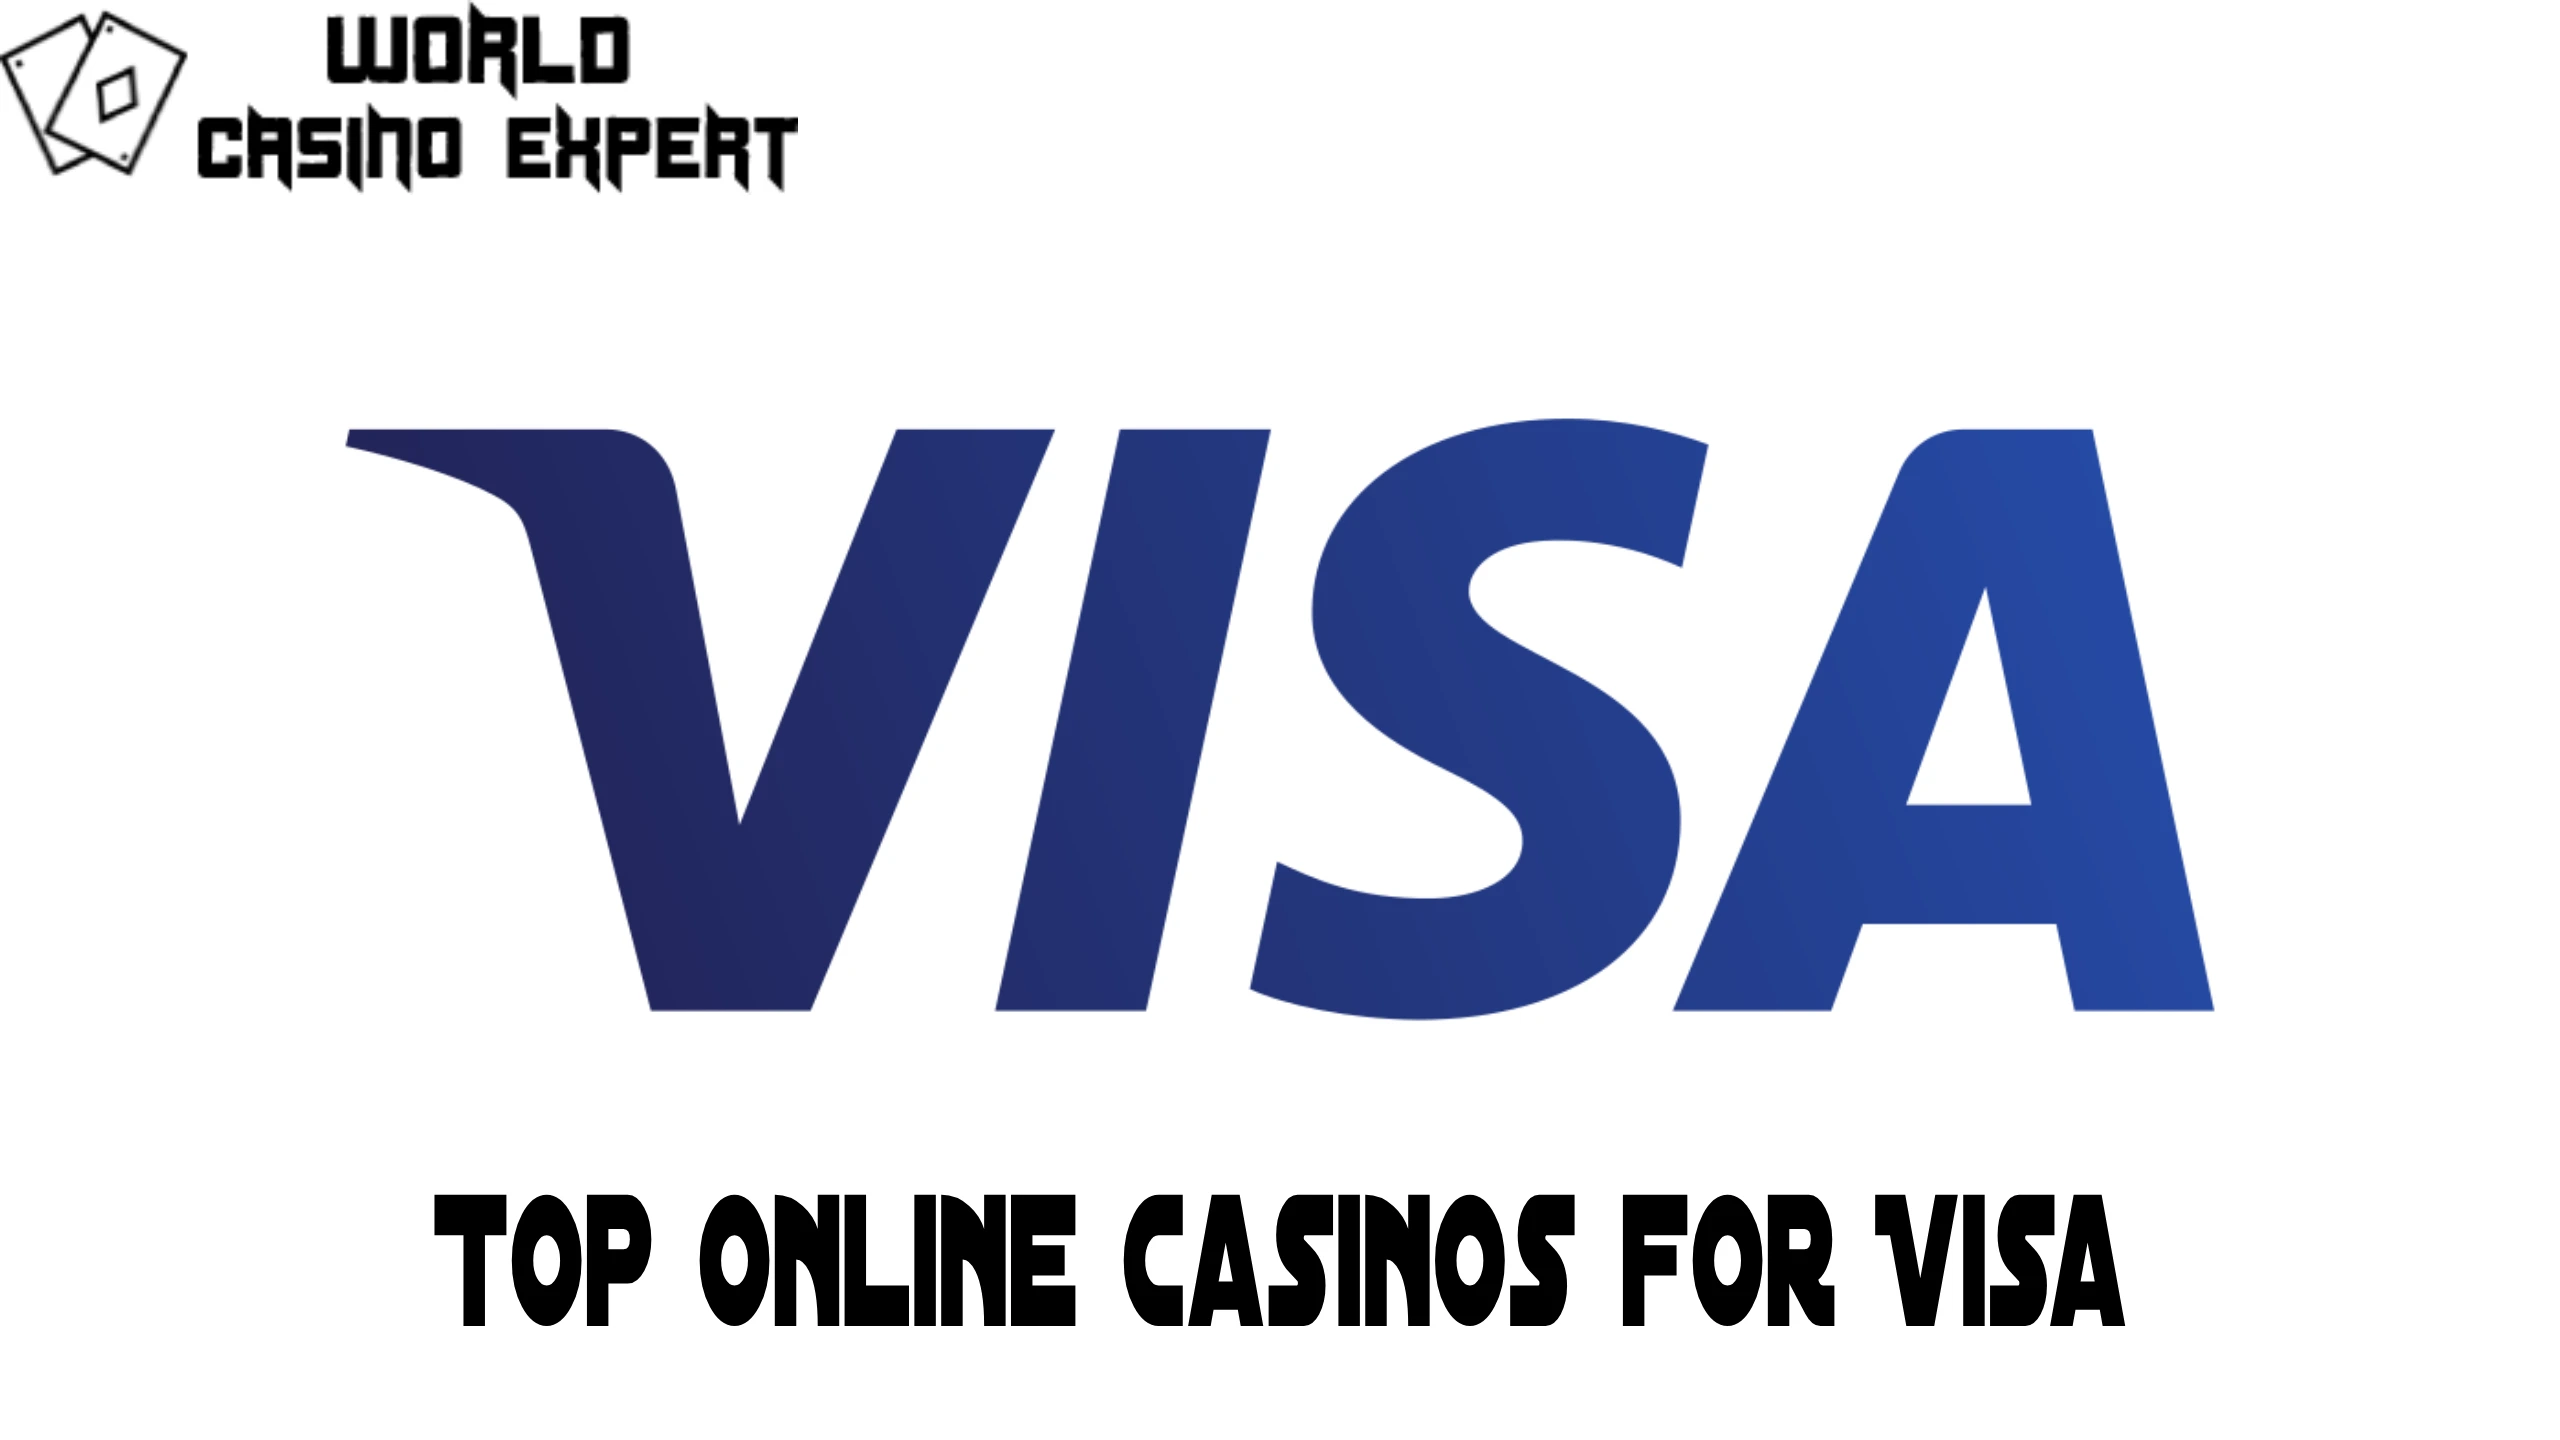 Top 10 Online Casinos for Visa | World Casino Expert